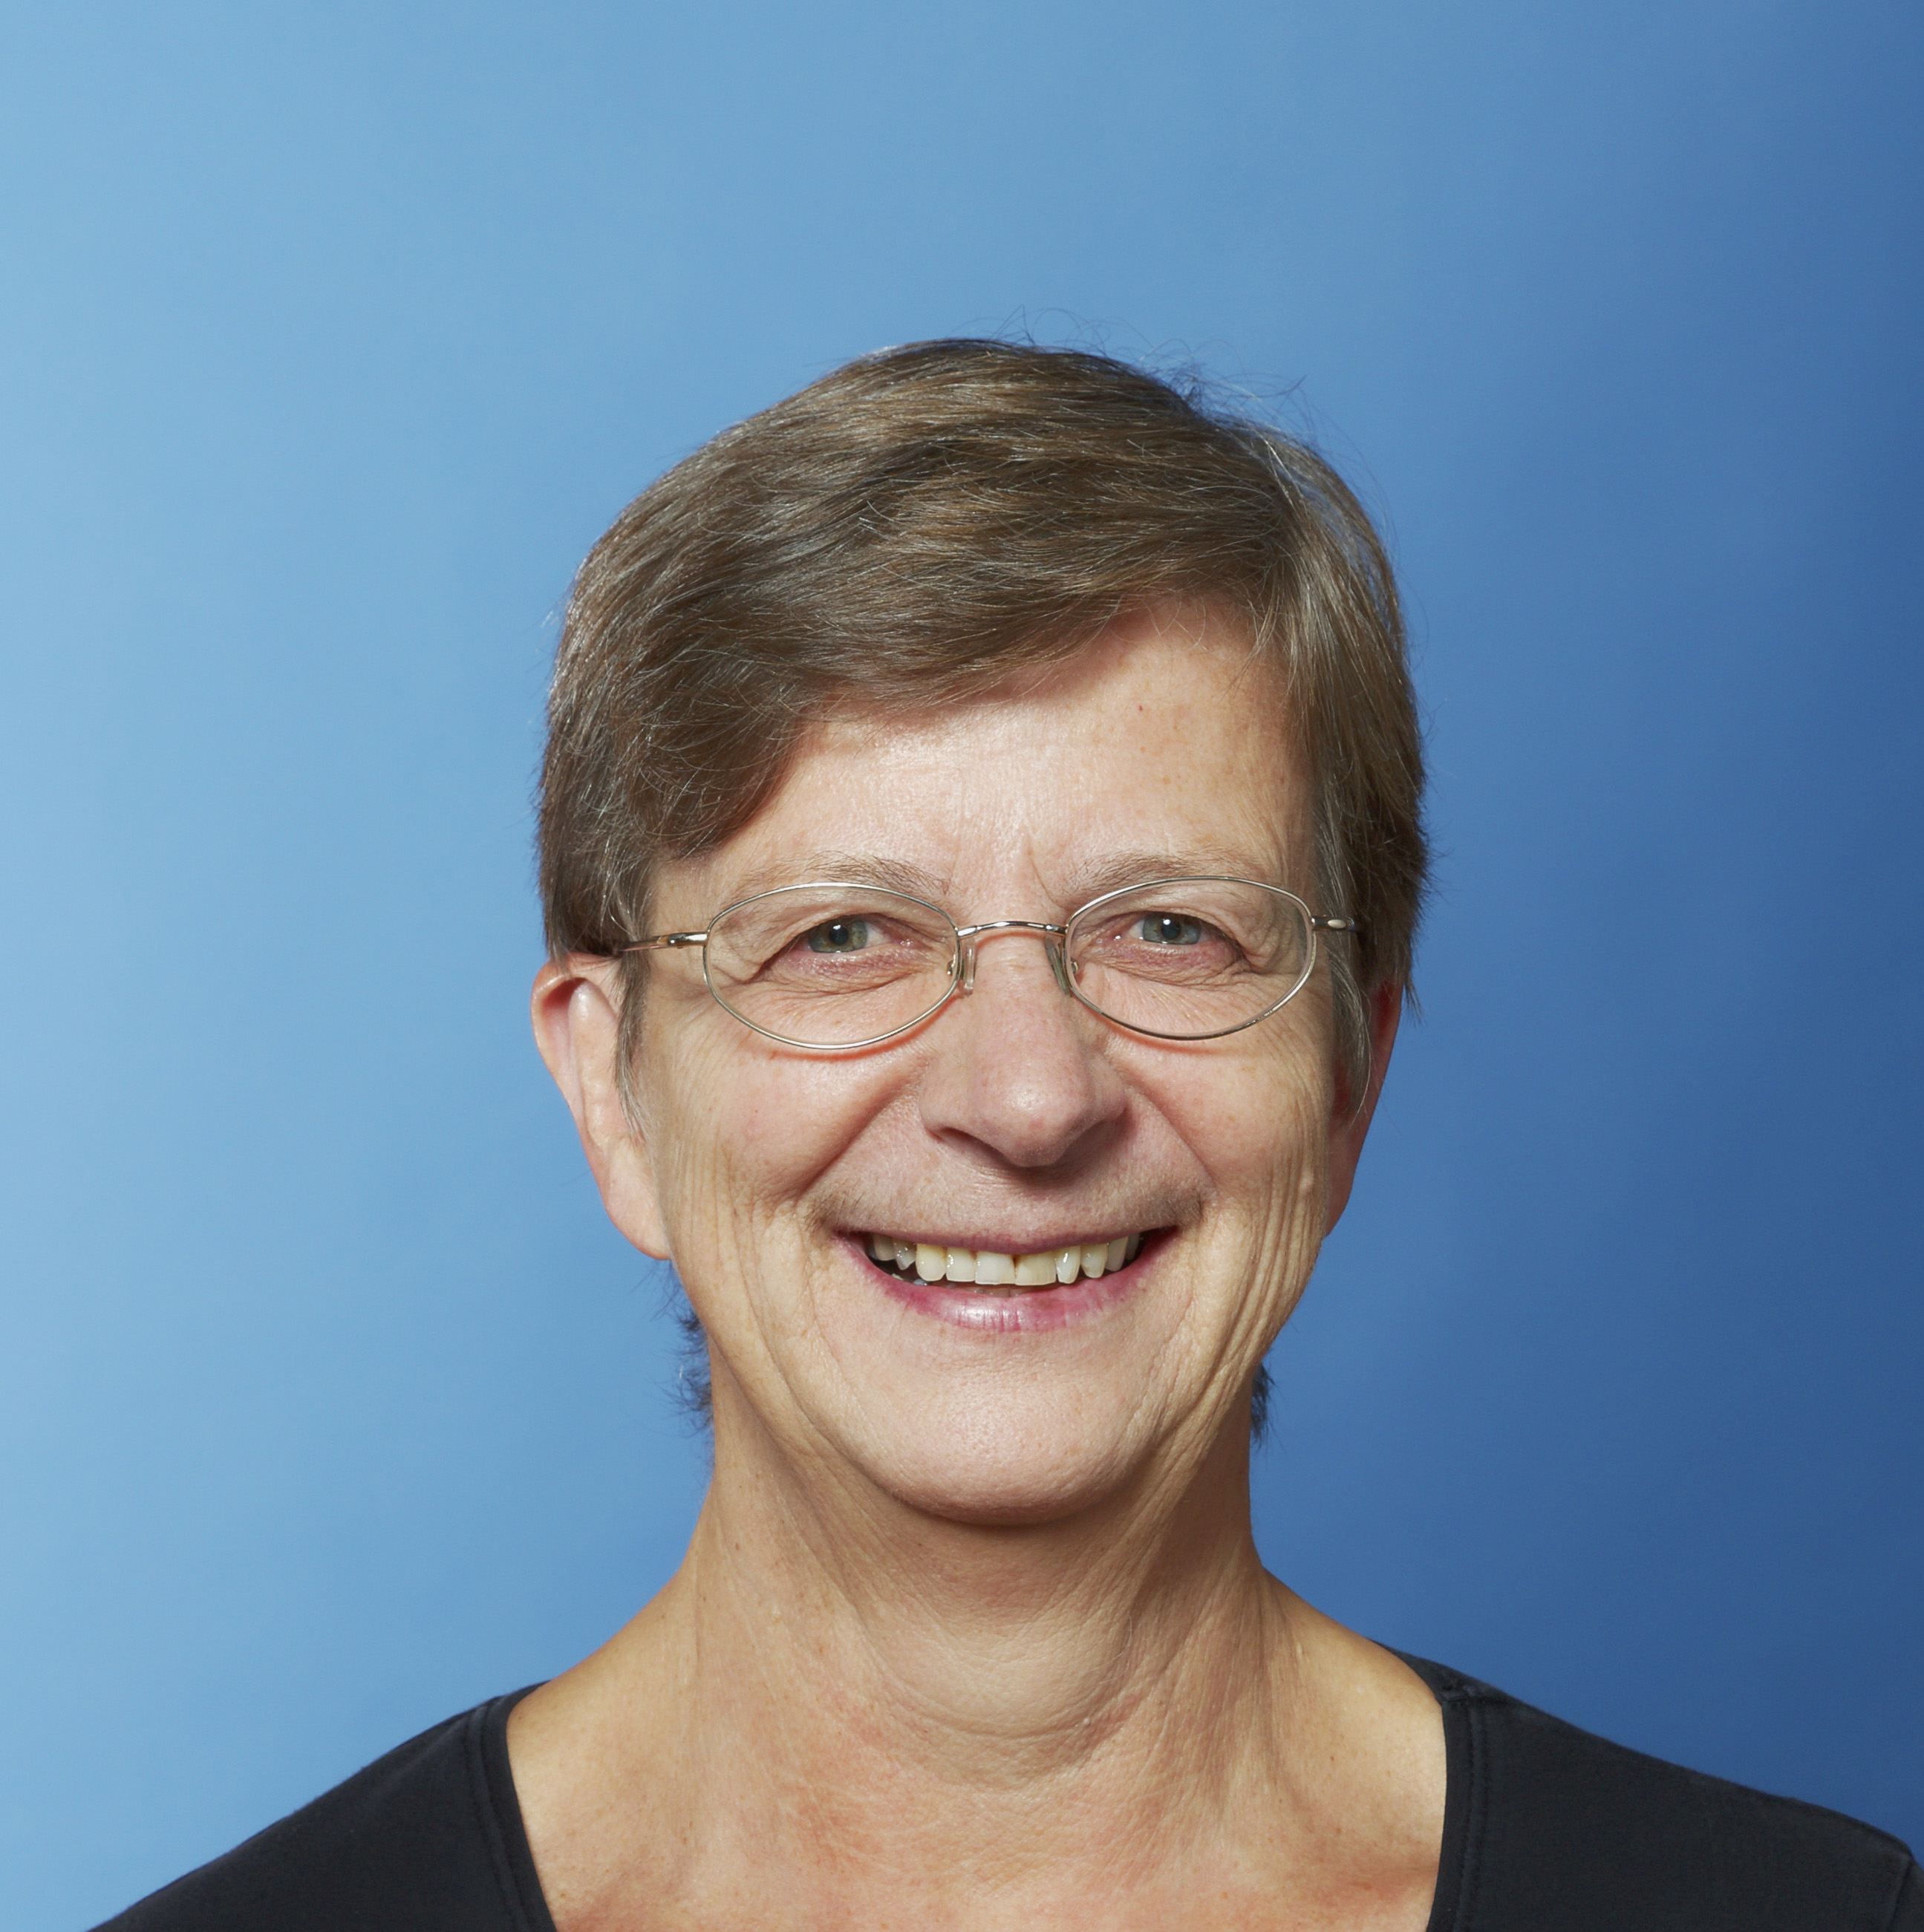 Regula Meschberger (bisher), 62-jährig, Juristin, Schulleiterin